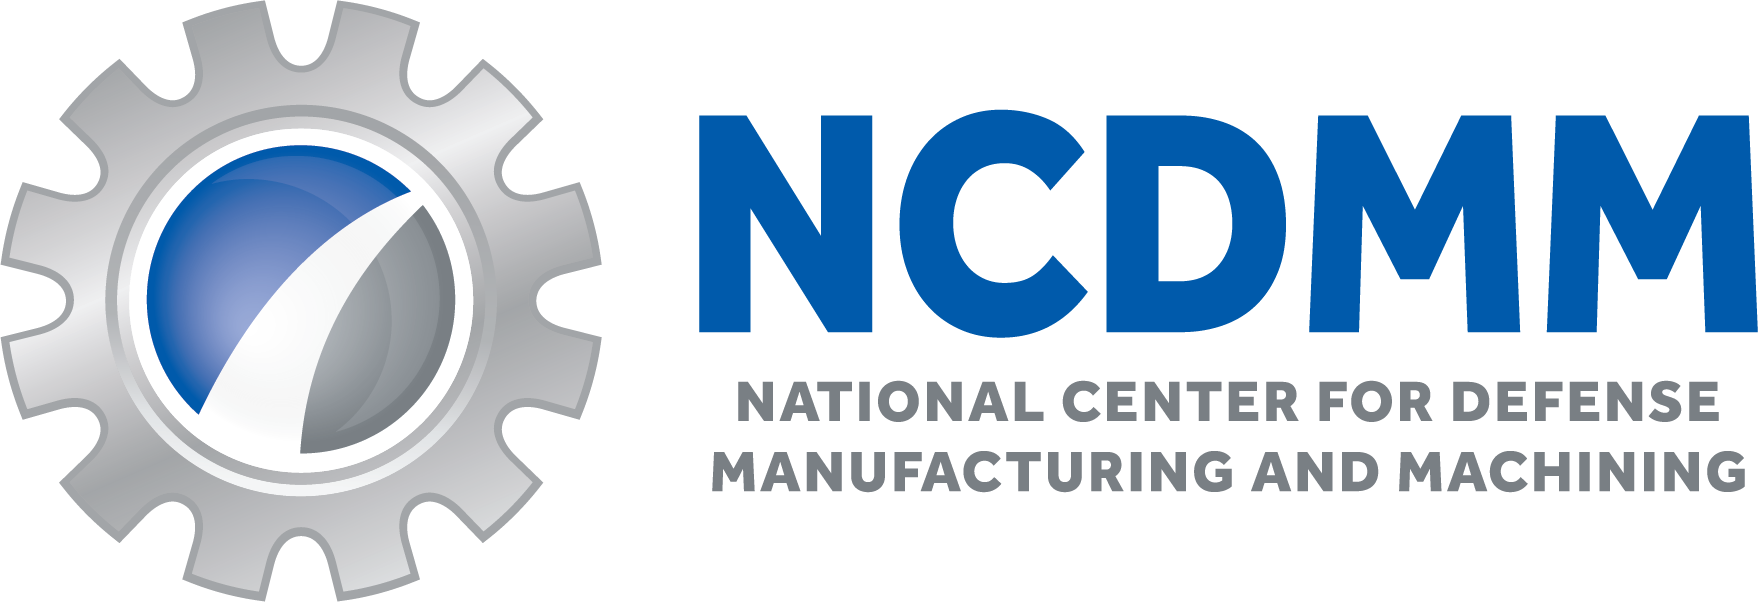 NCDMM logo